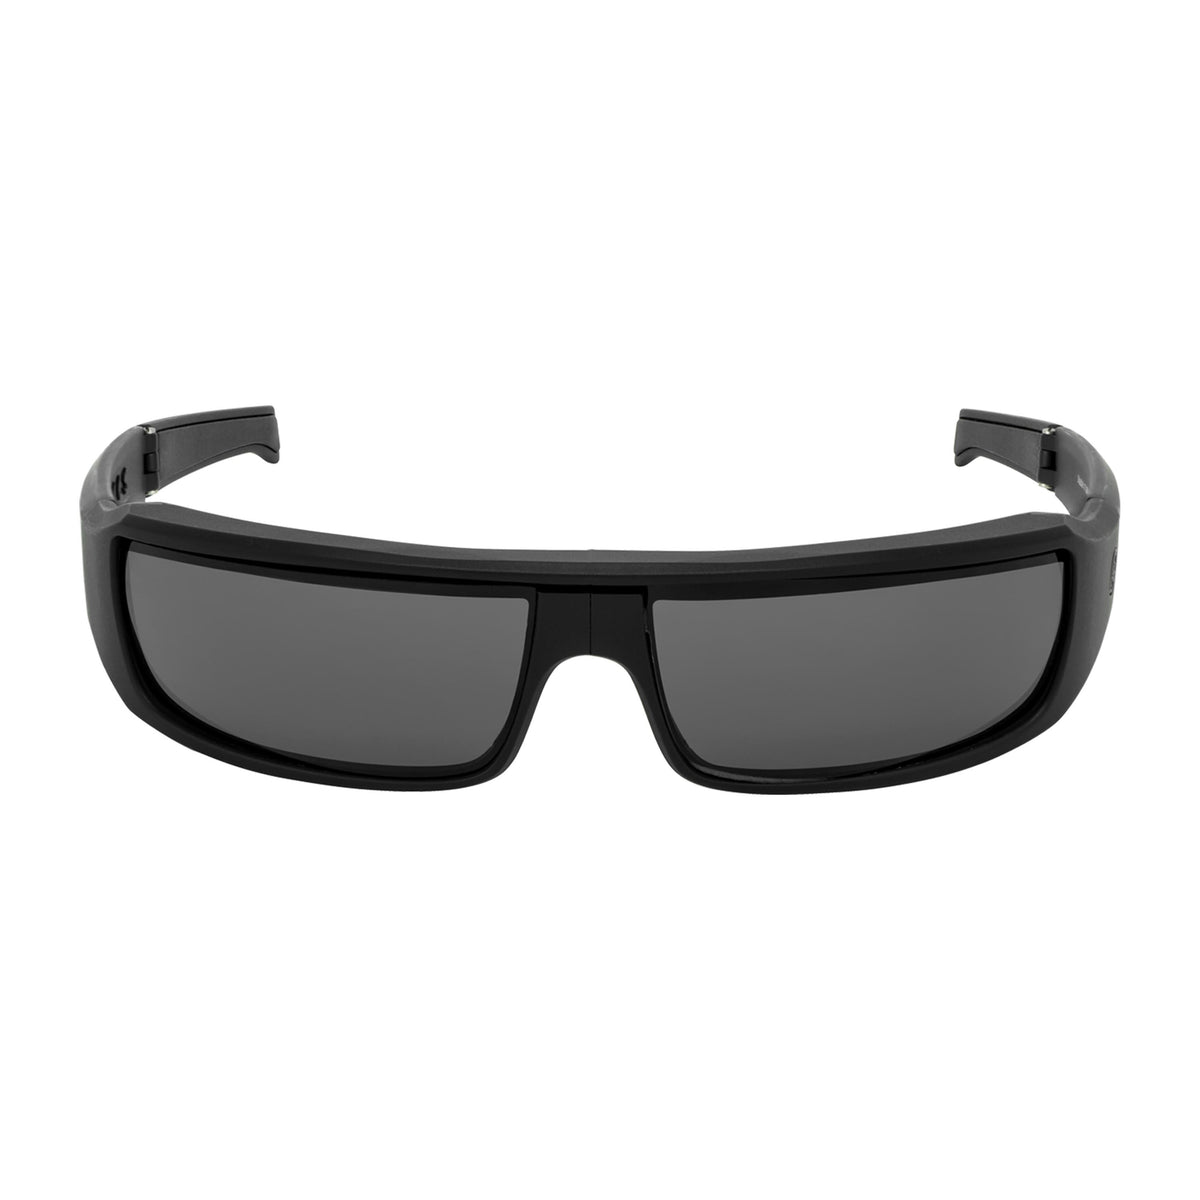 Popticals, Premium Compact Sunglasses, PopSign, 010020-BMGP, Polarized Sunglasses, Matte Black Frame, Gray Lenses, Front View